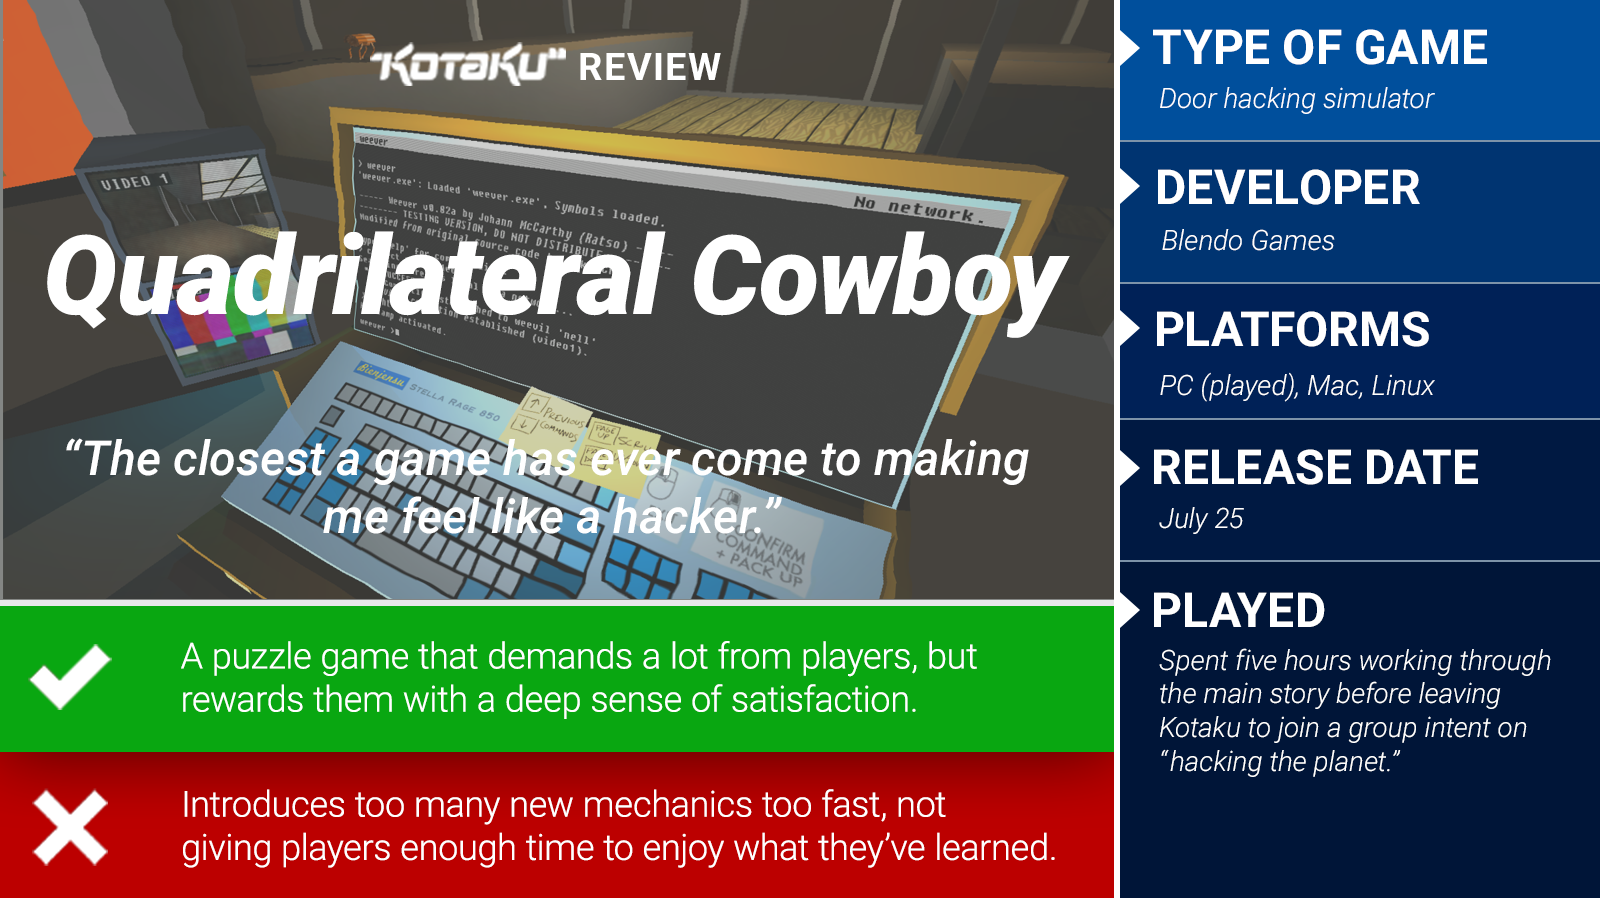 Quadrilateral Cowboy: The Kotaku Review